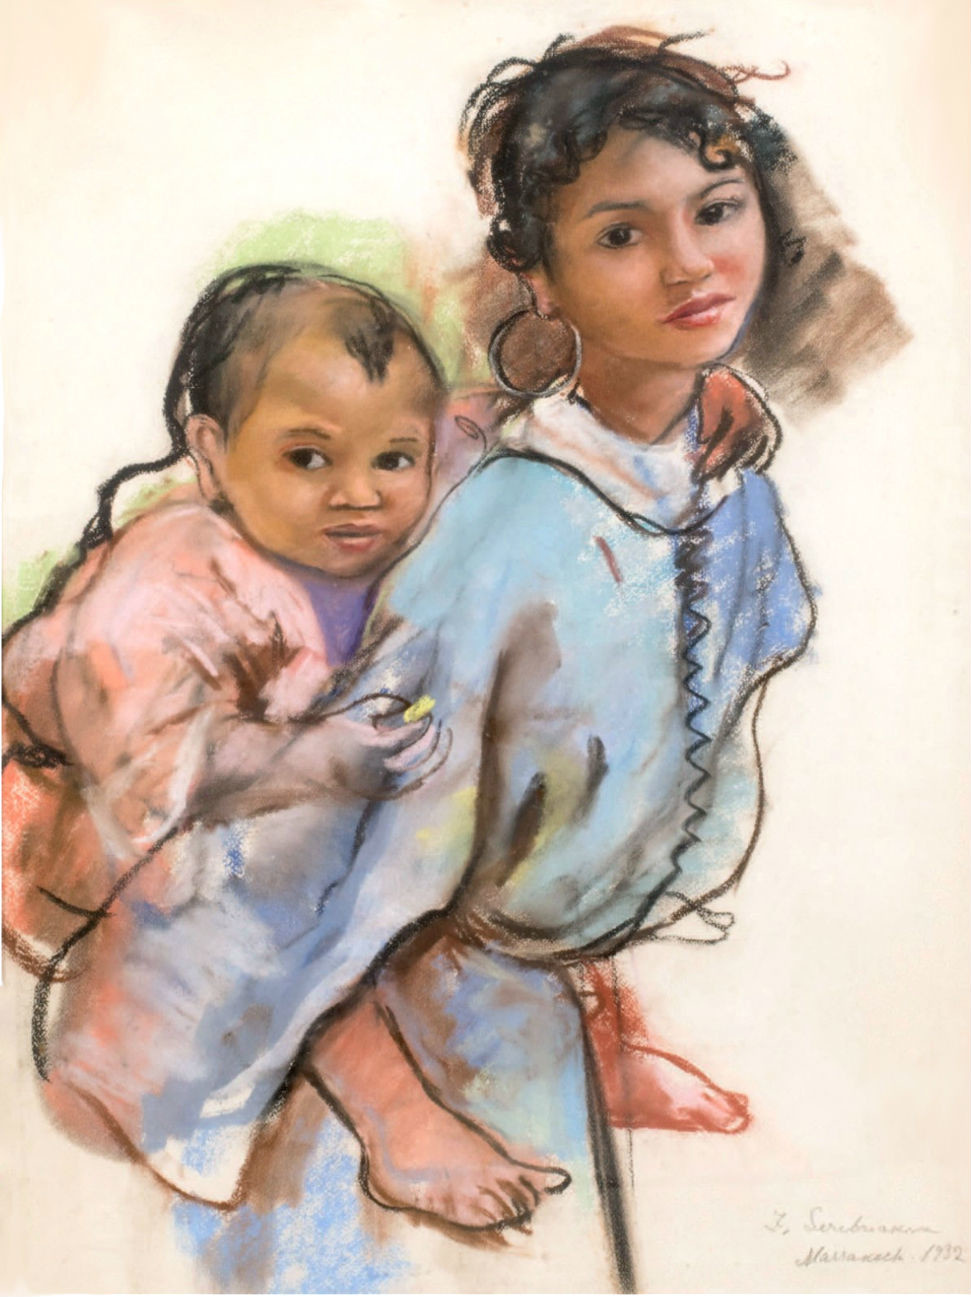 Mère et enfant par Zinaïda Serebriakova, 1932